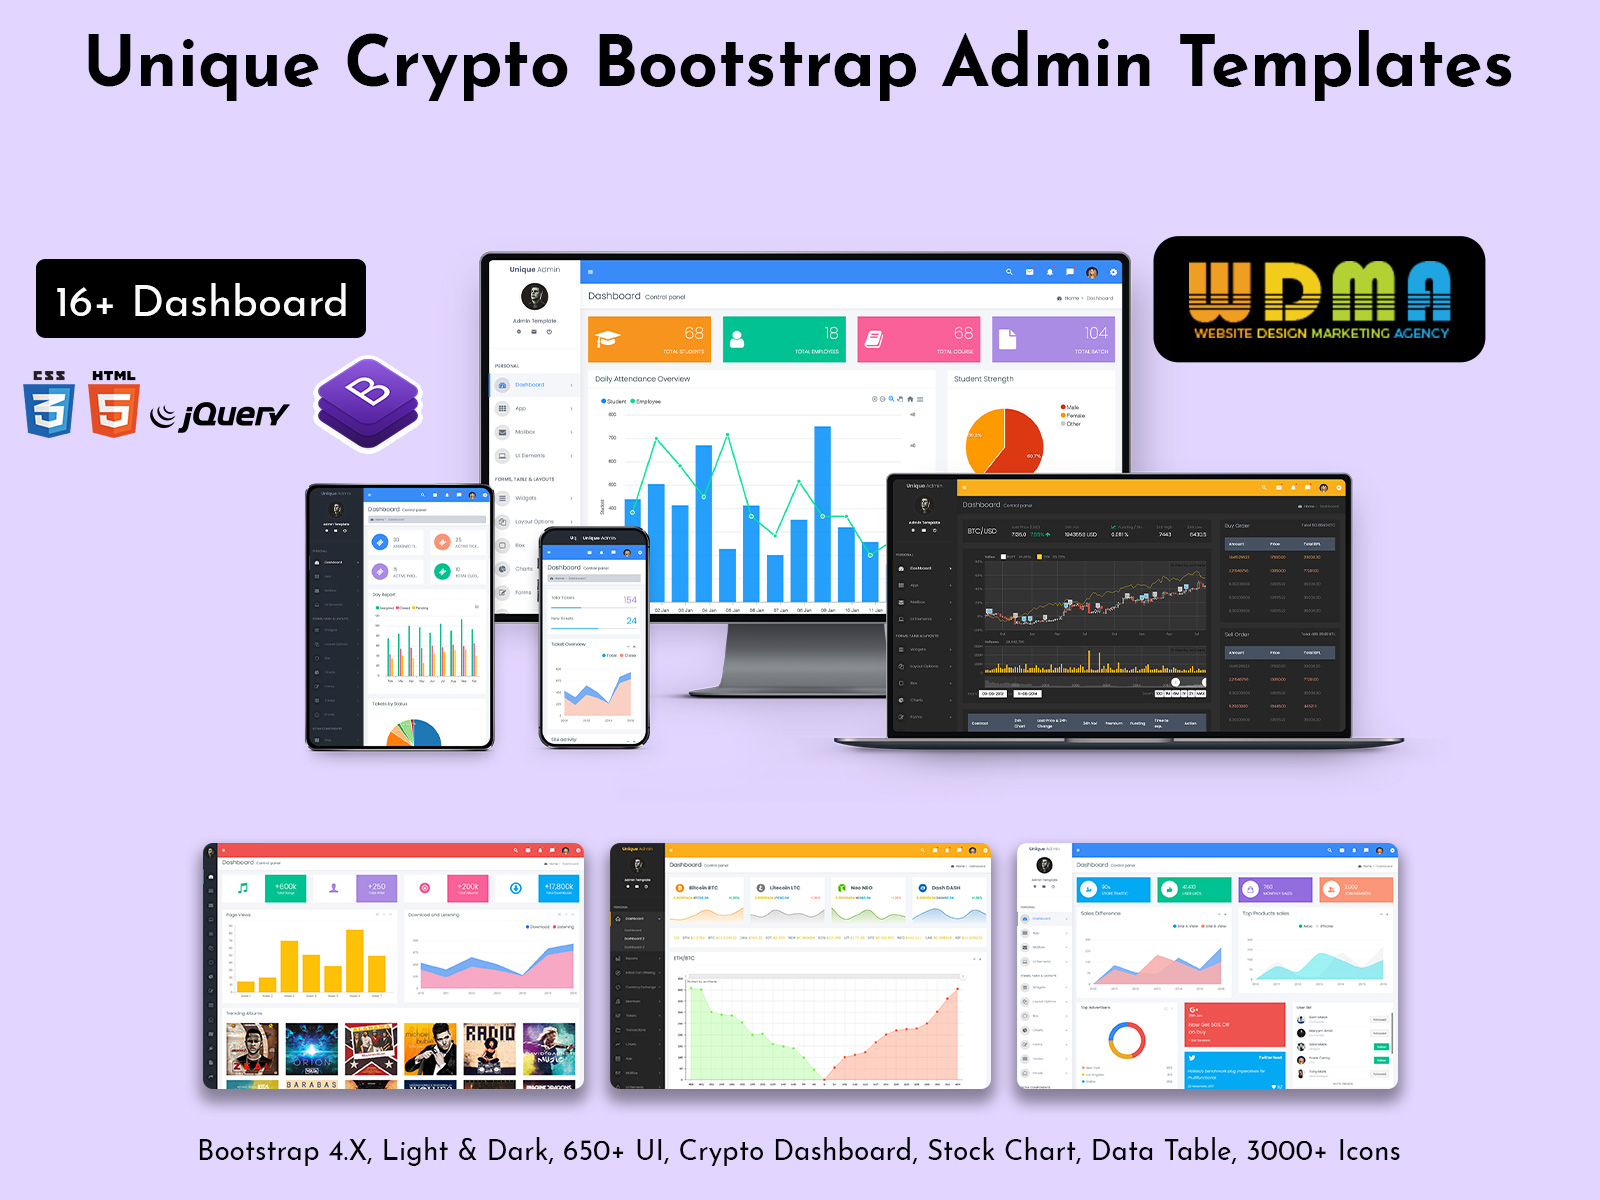 Unique Bootstrap Admin Templates: A Comprehensive Crypto Dashboard